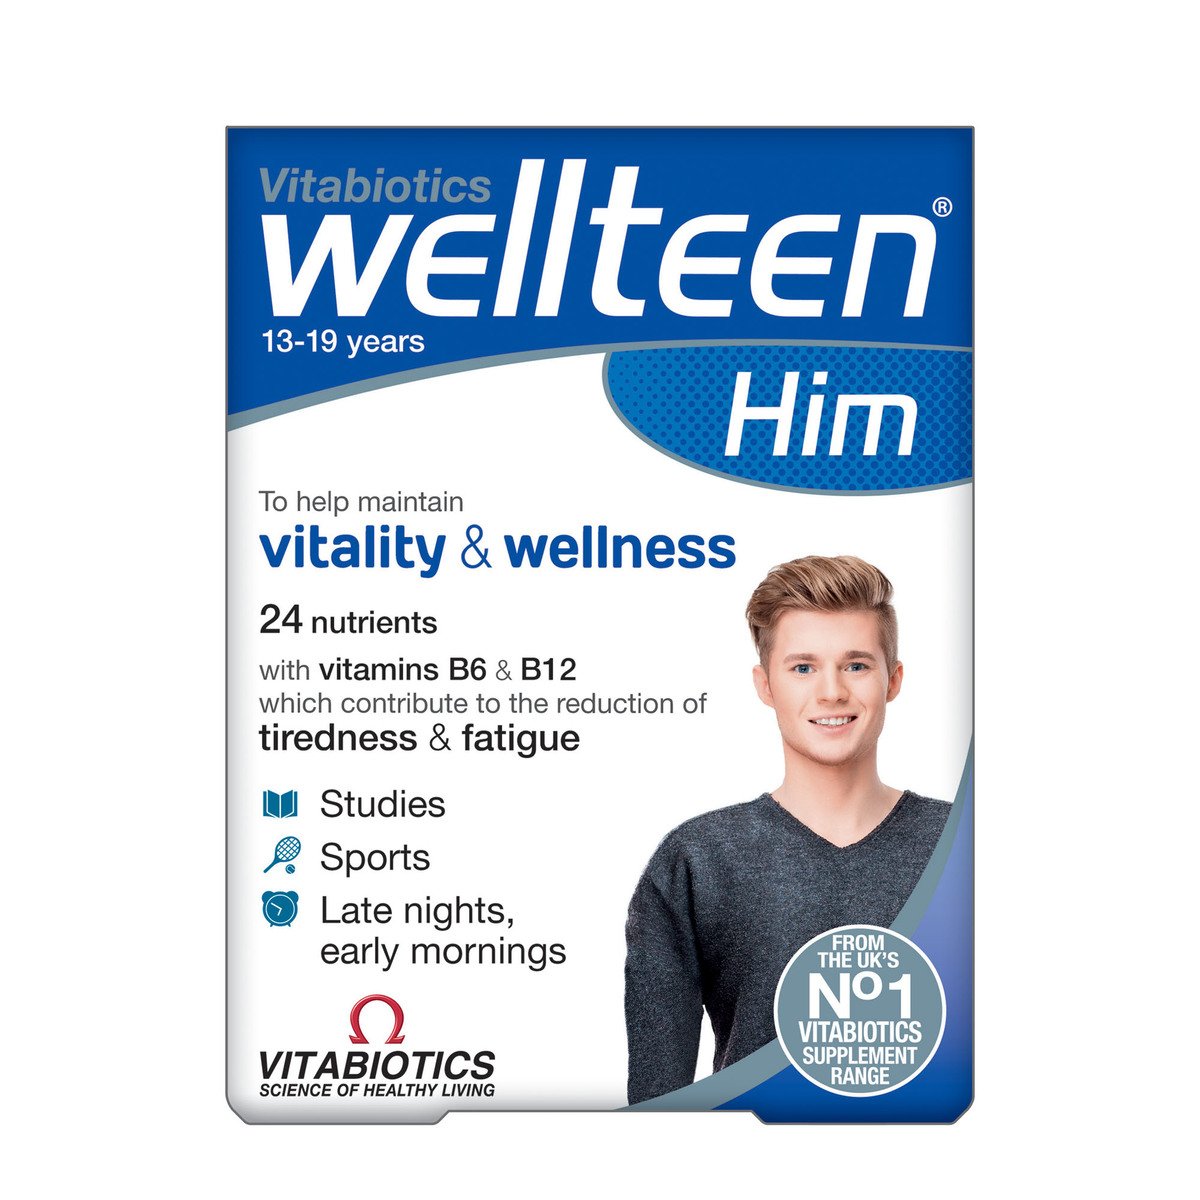 Vitabiotics Wellteen Him For 13-19 Years Old 30 pcs